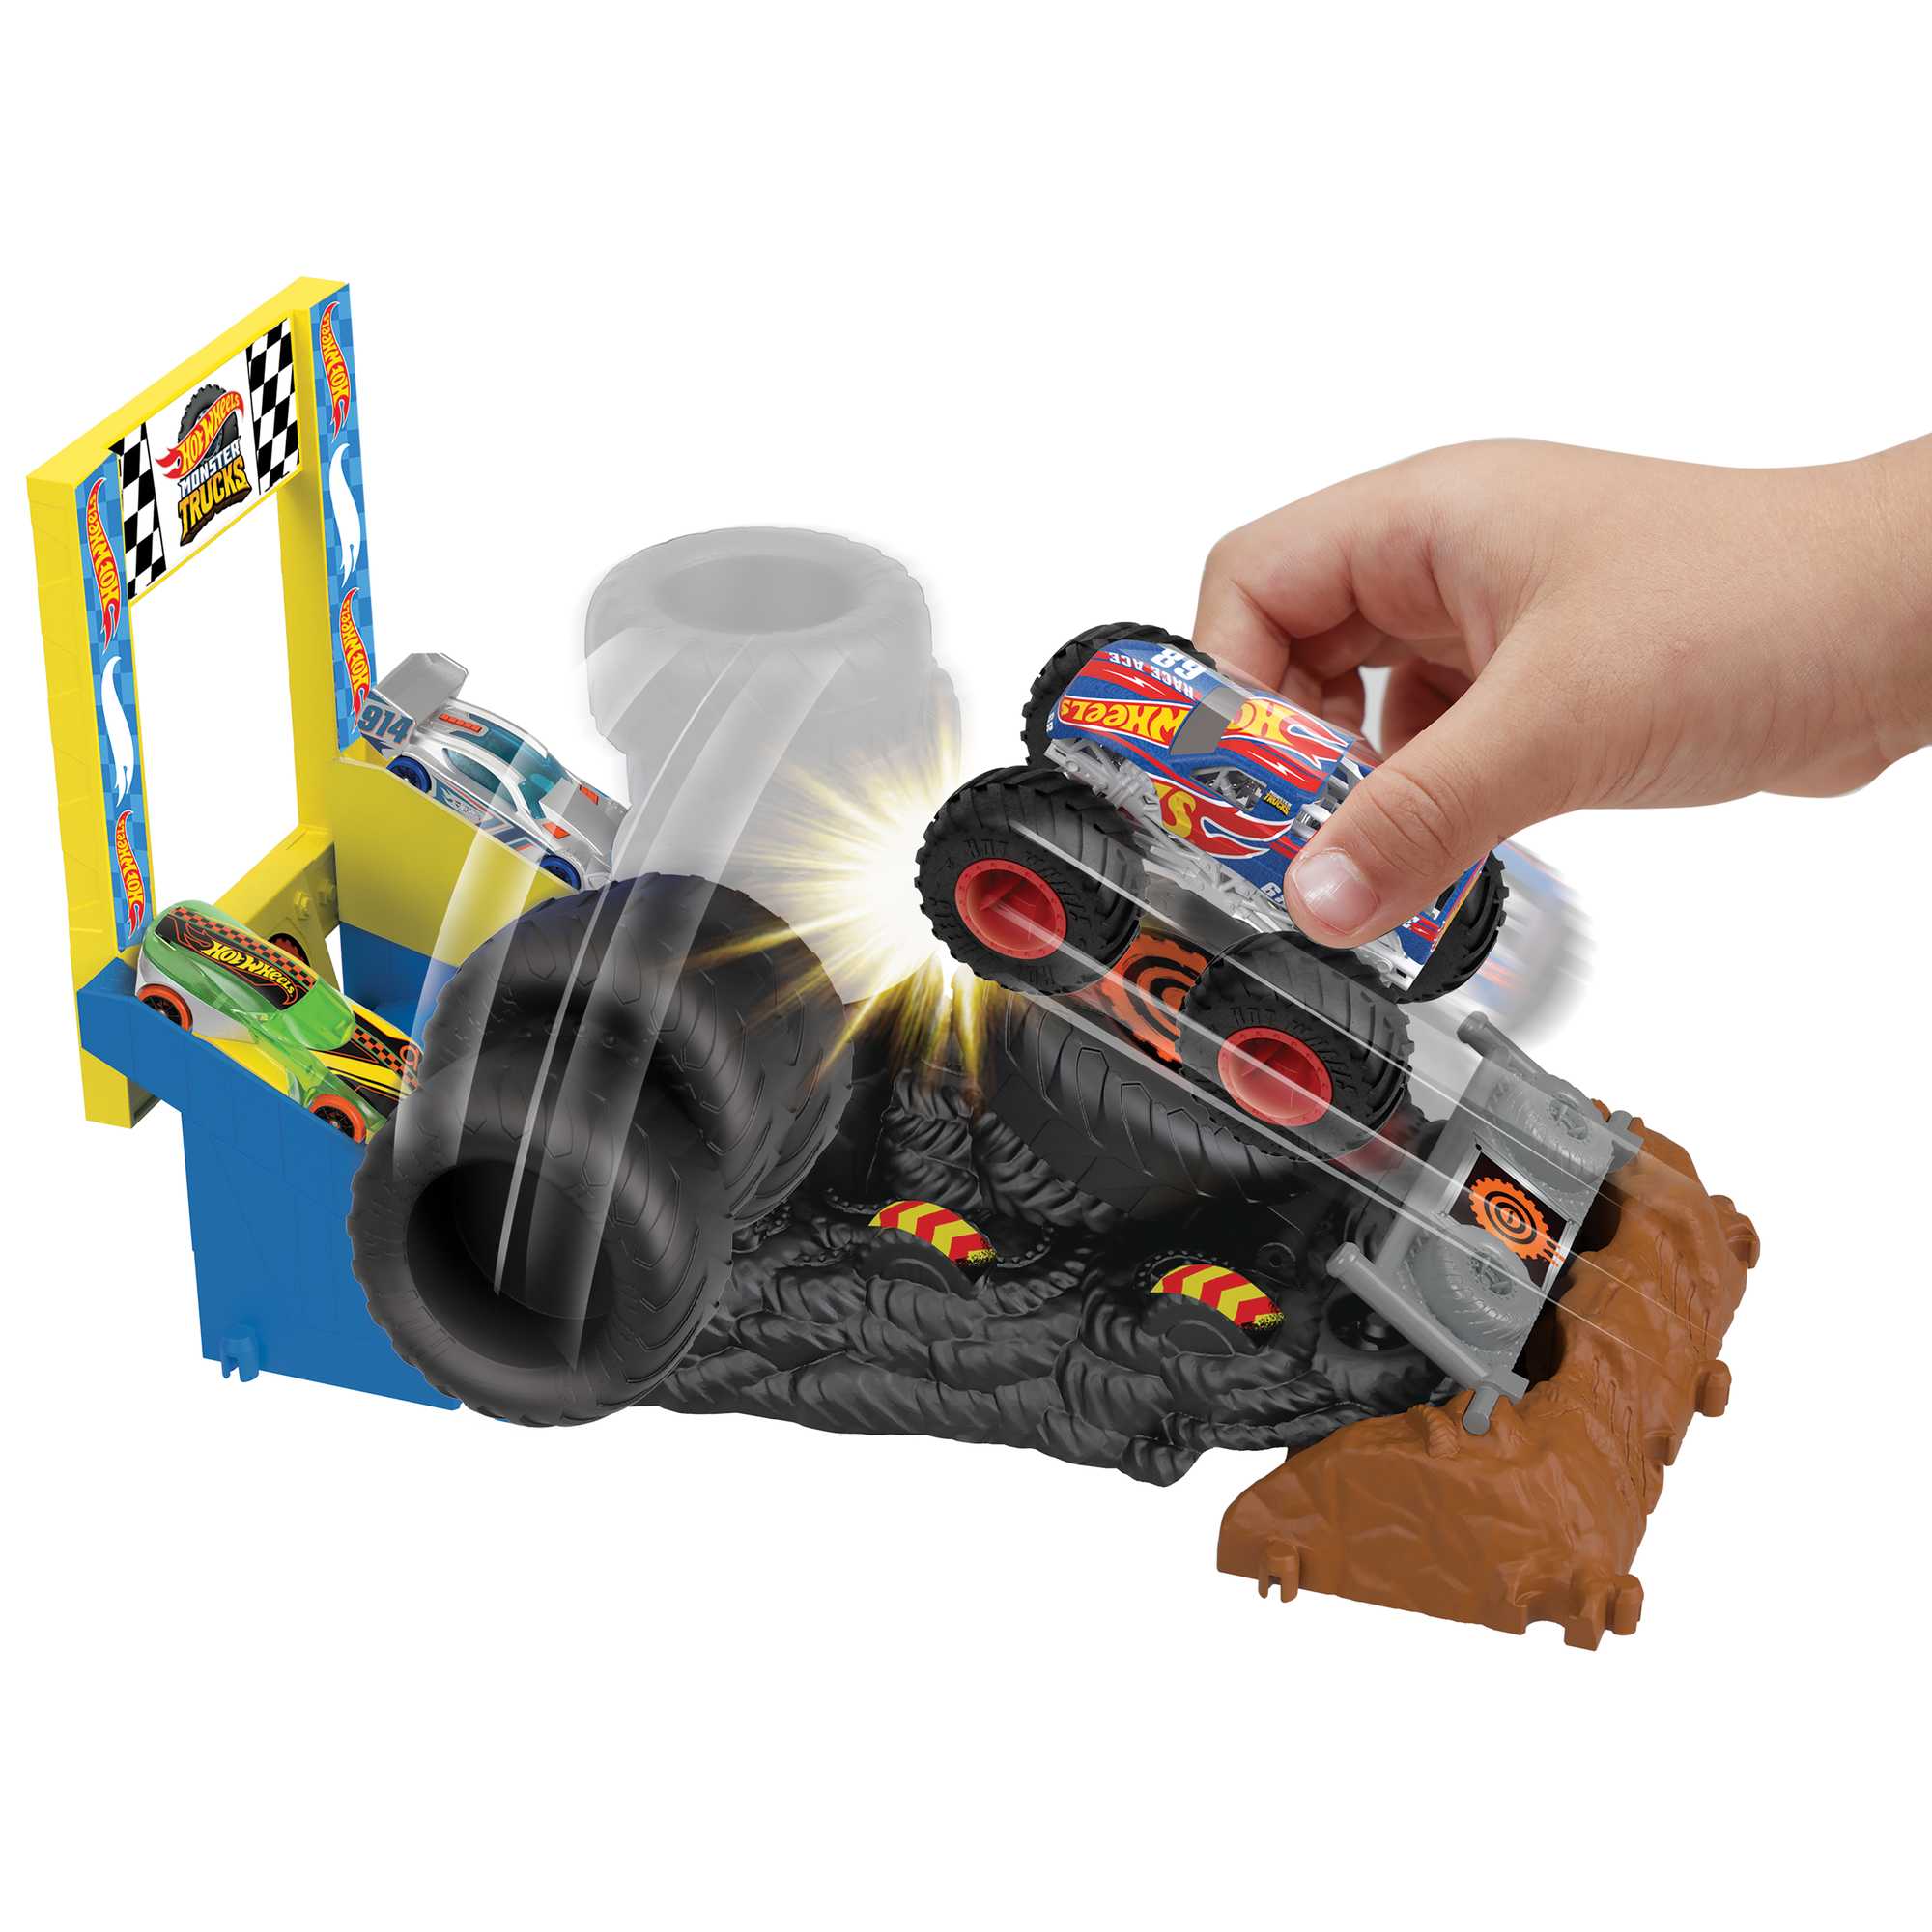 Hot Wheels® Monster Trucks Arena Smashers Mega-Wrex VS Crushzilla